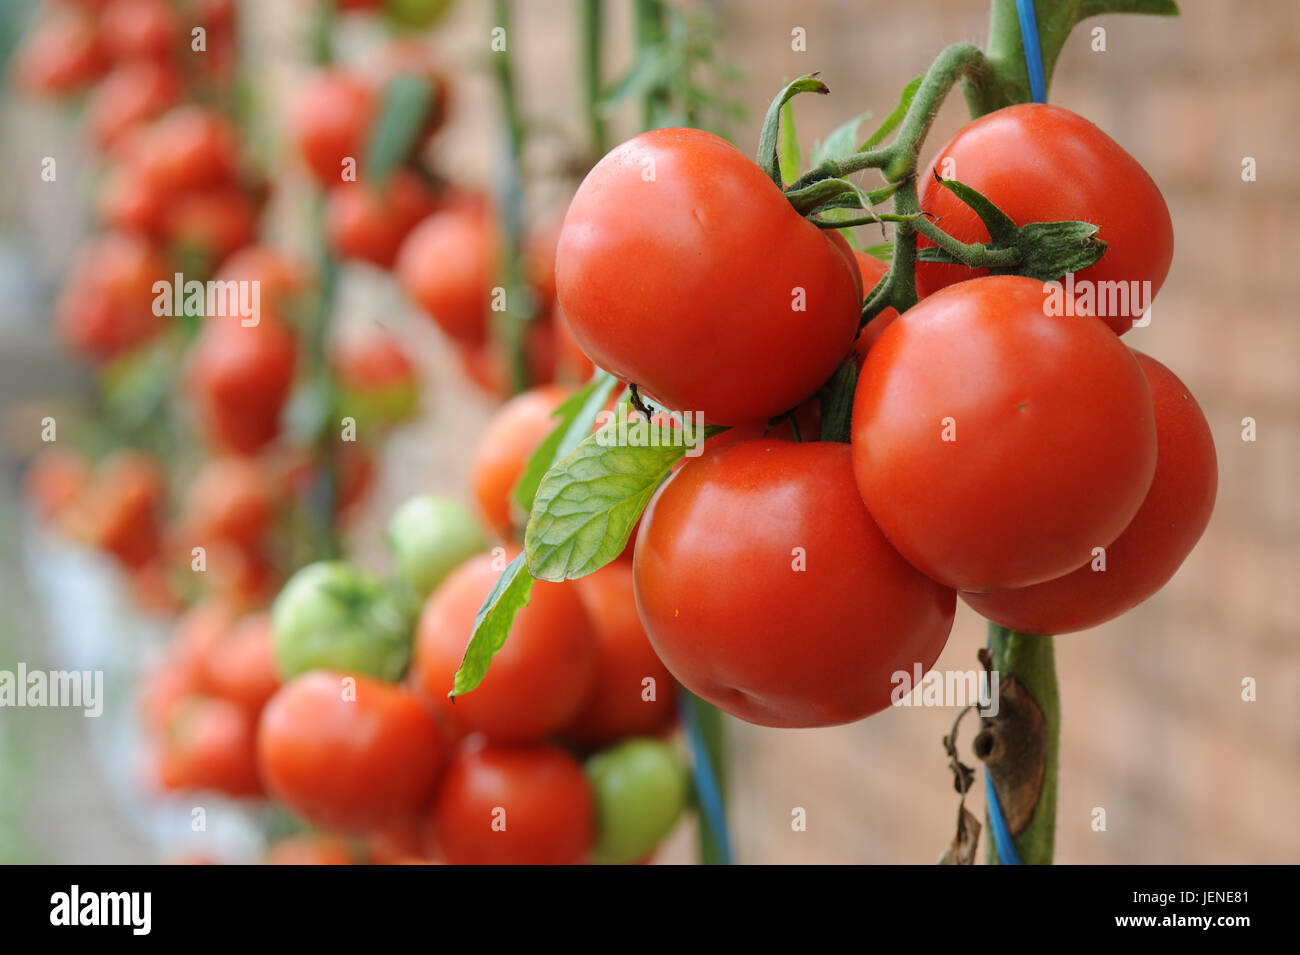 Close-up of tomato plants Stock Photo